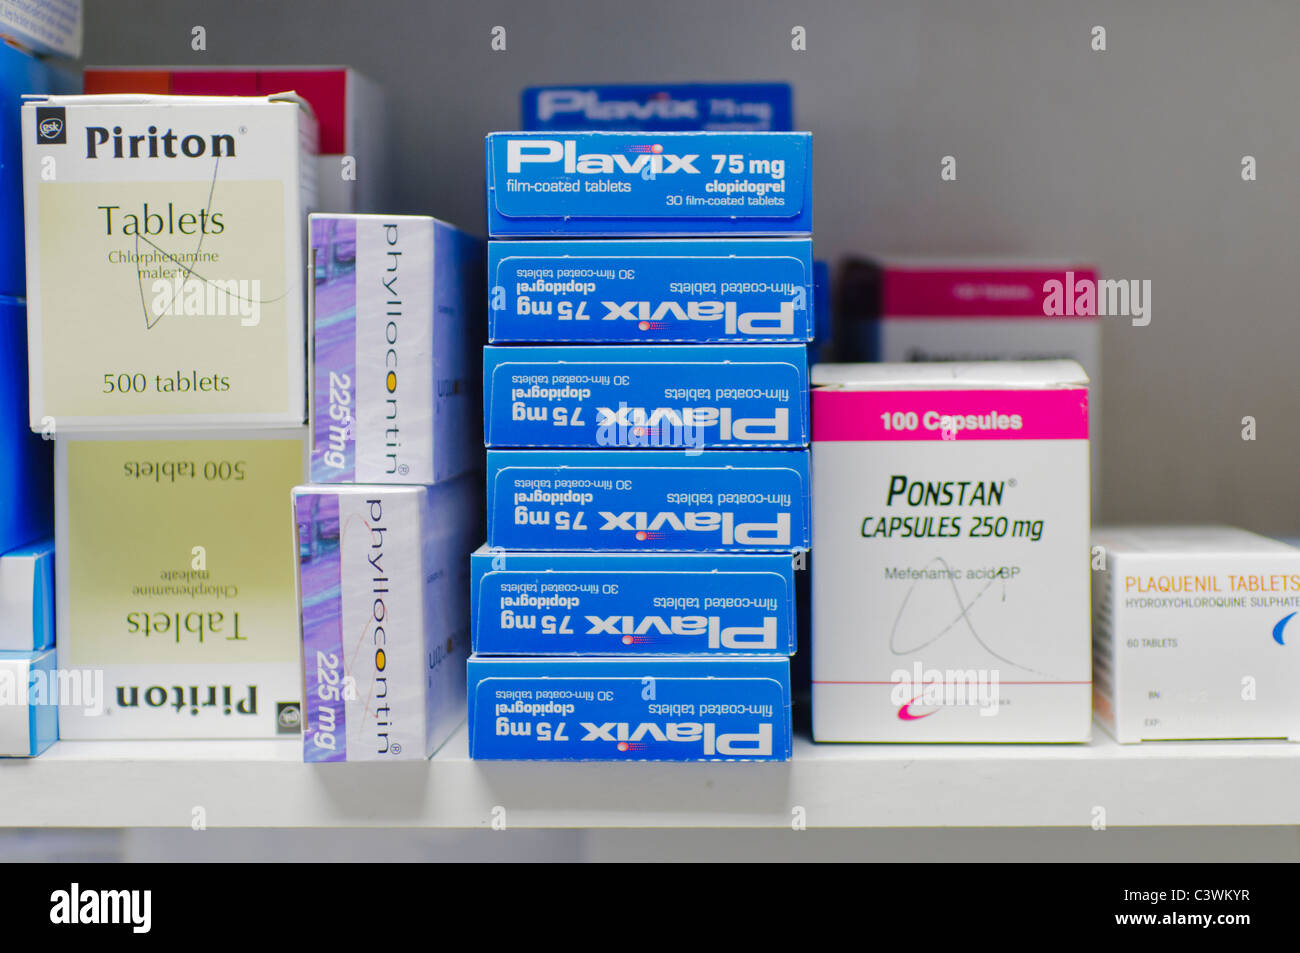 Cheap Plavix Tablets